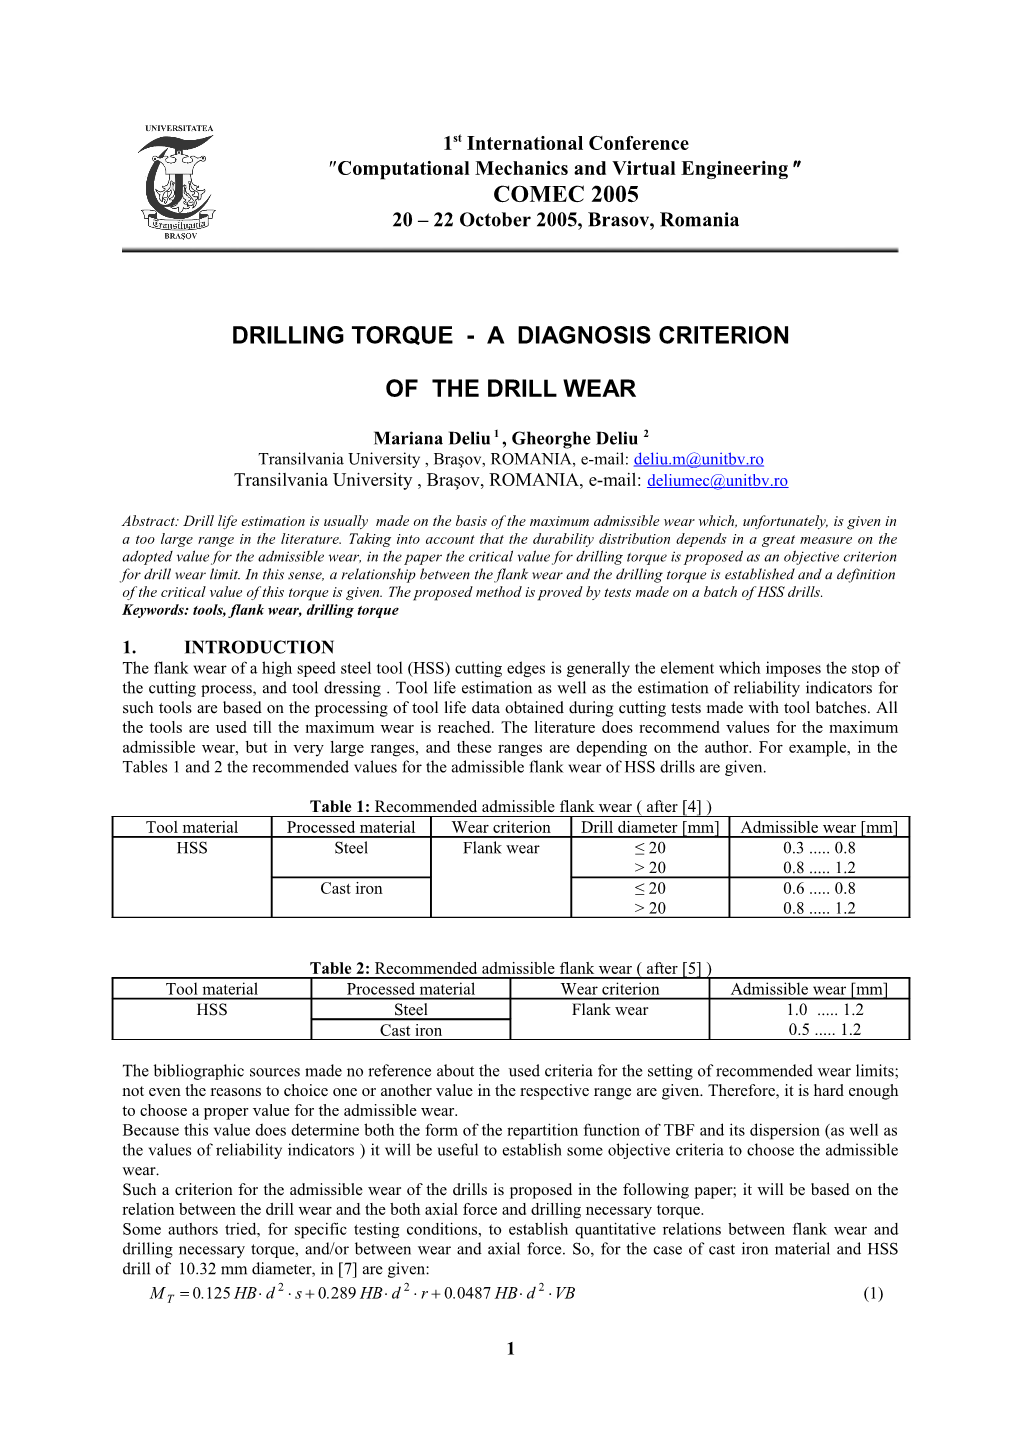 Drilling Torque - a Diagnosis Criterion